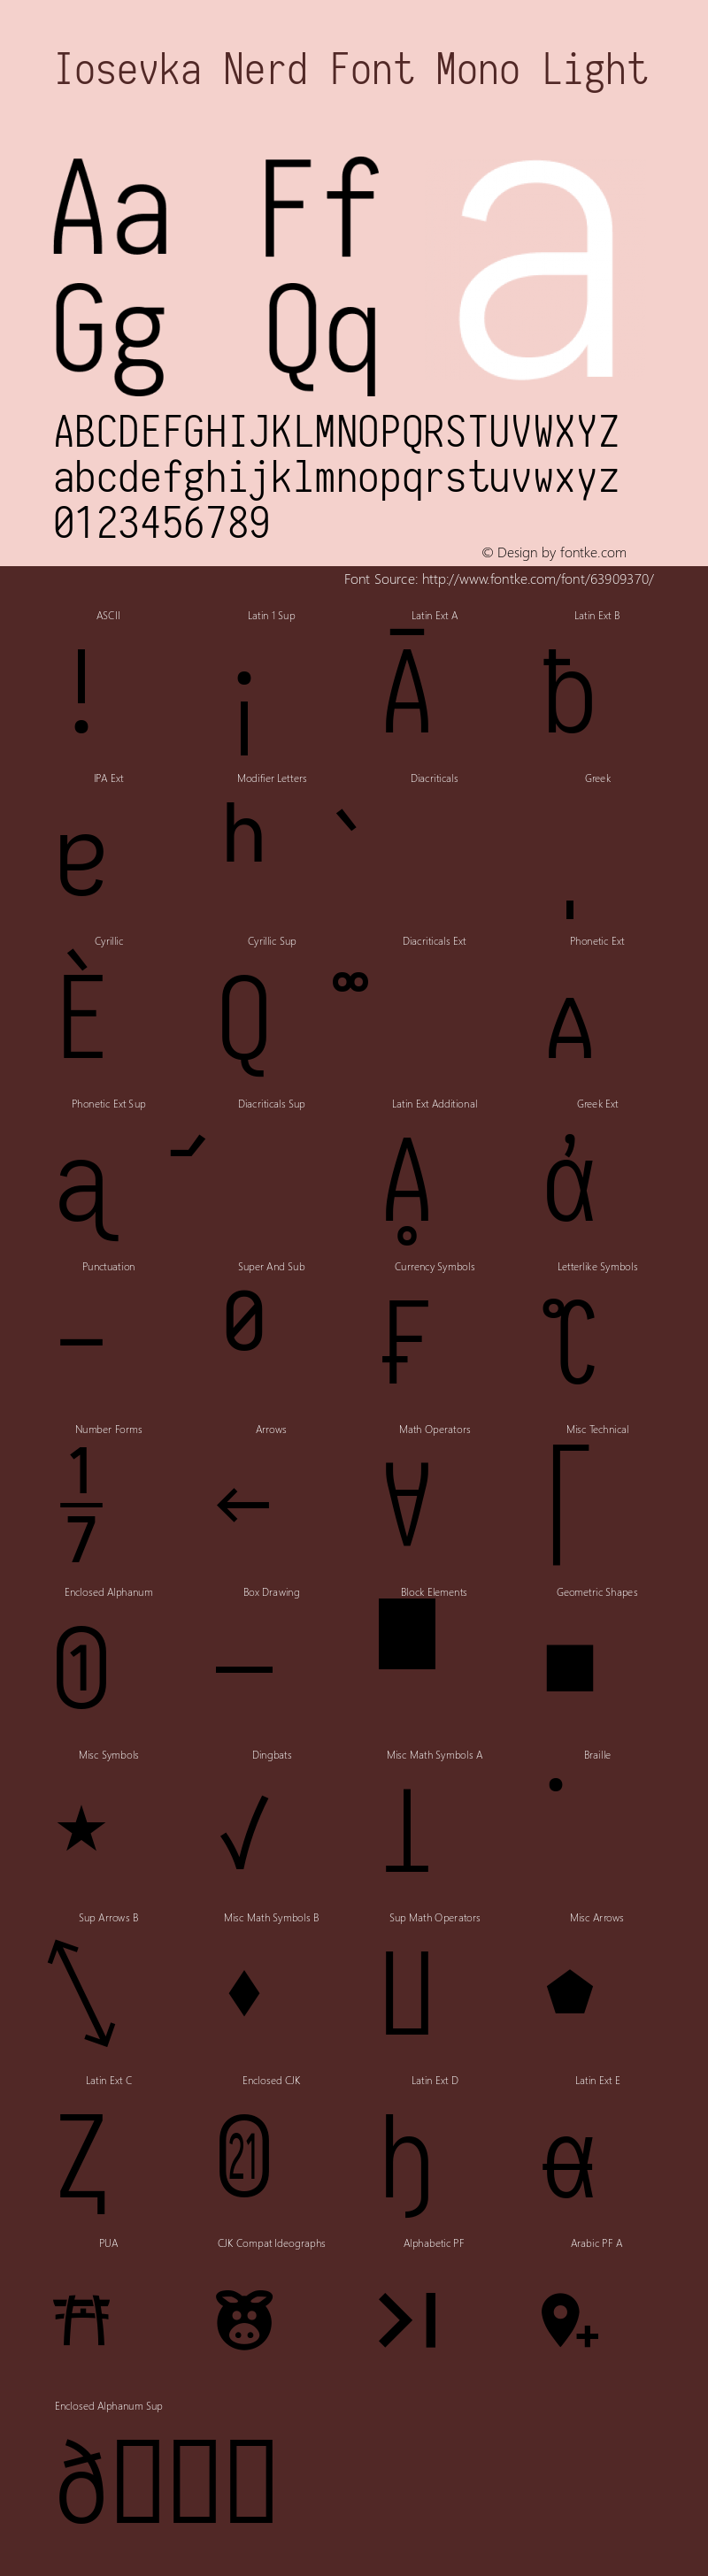 Iosevka Term Light Nerd Font Complete Mono 1.14.0; ttfautohint (v1.7.9-c794) Font Sample